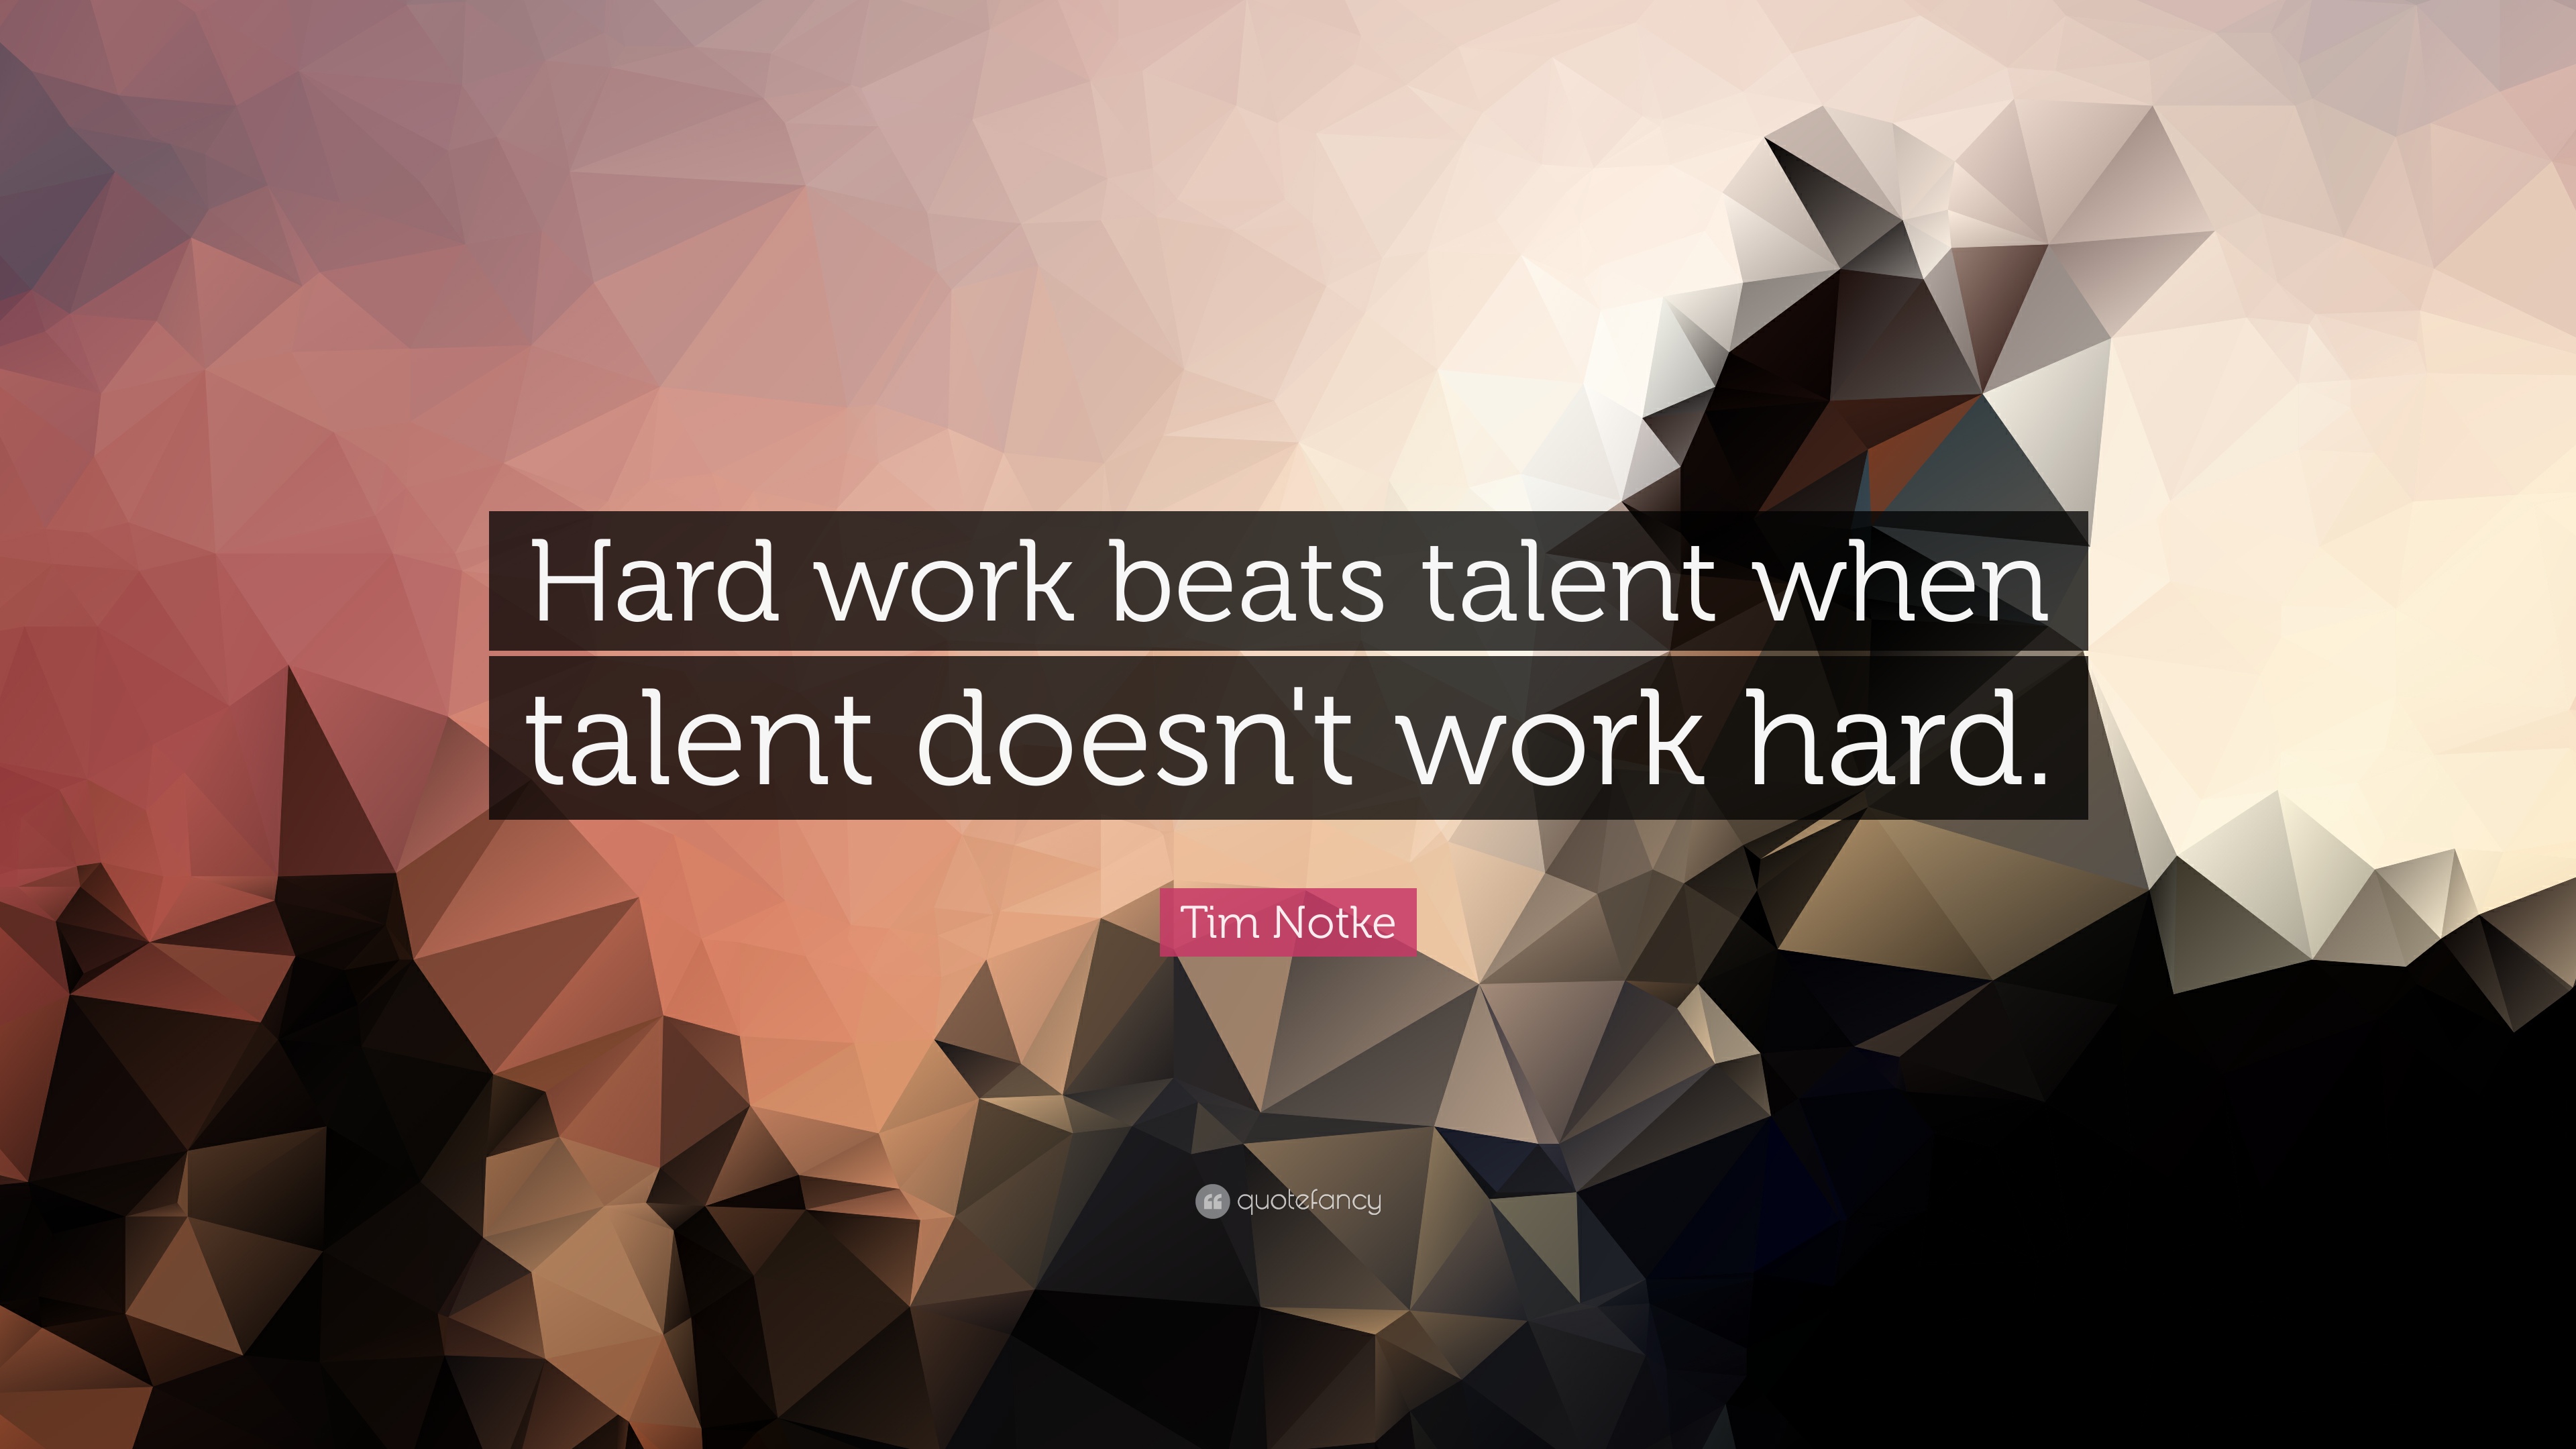 Tim Notke Quote: “Hard work beats talent when talent doesn't work hard.”